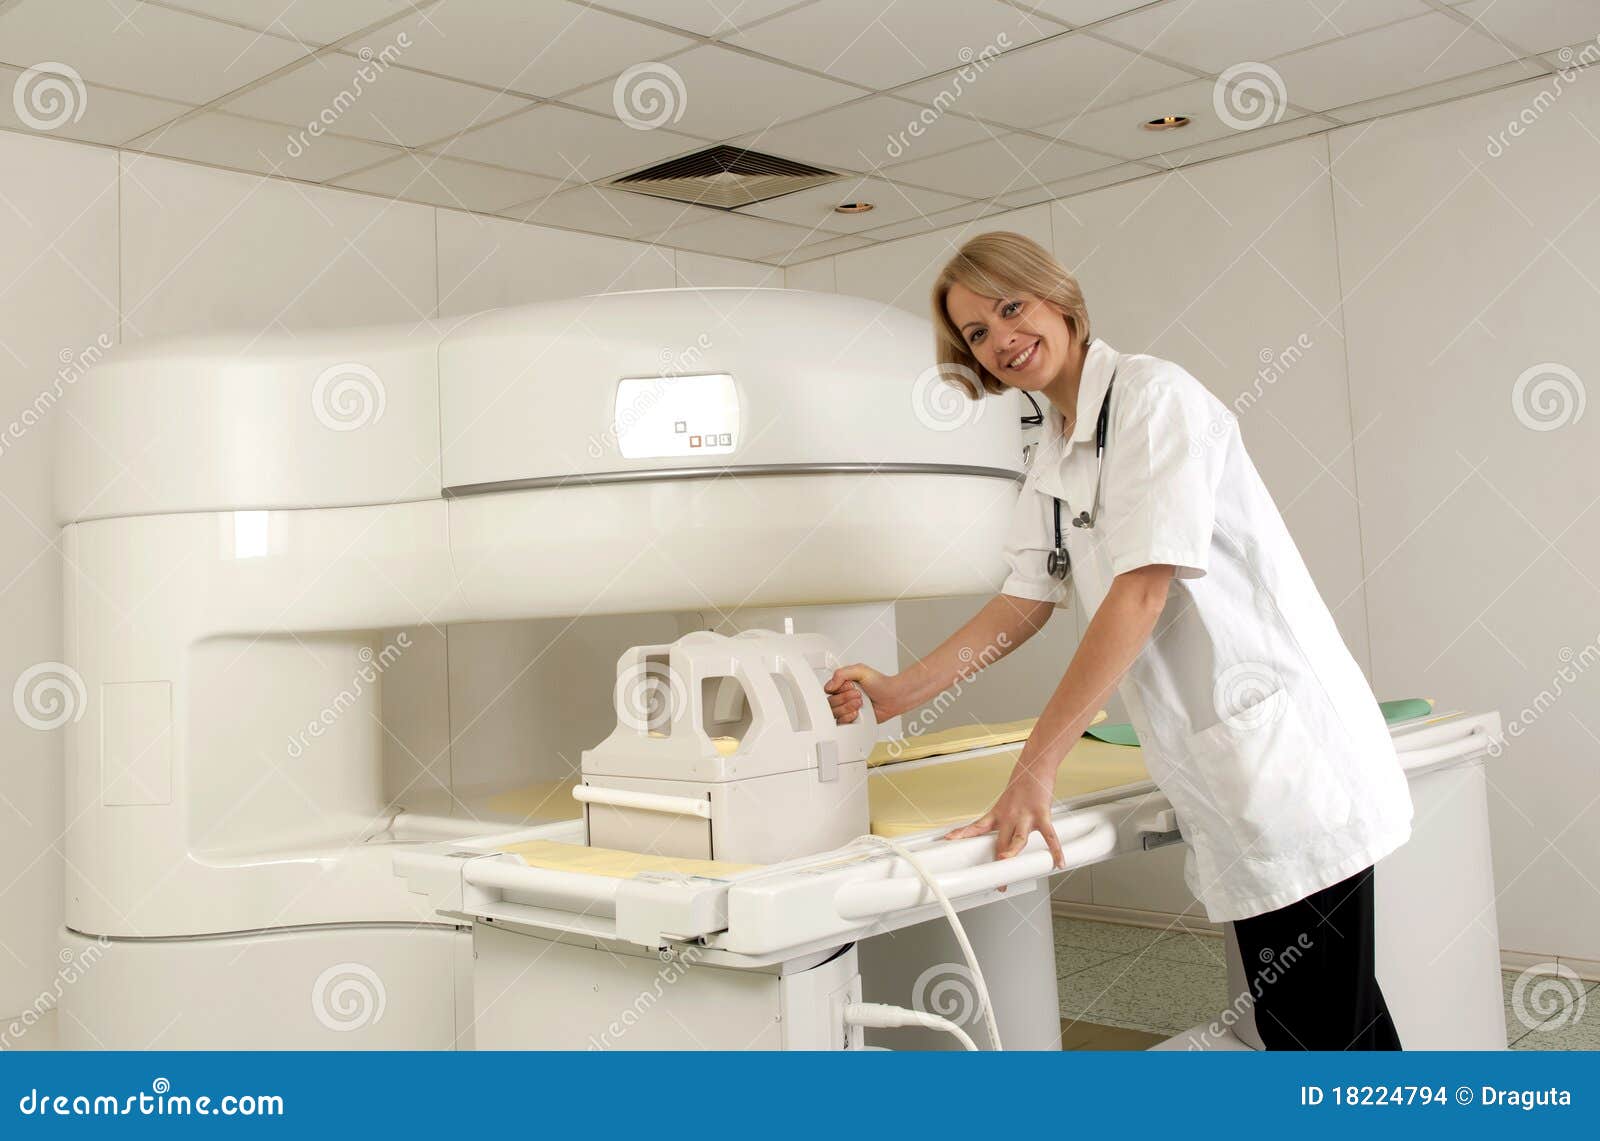 doctor prepare mri scanner